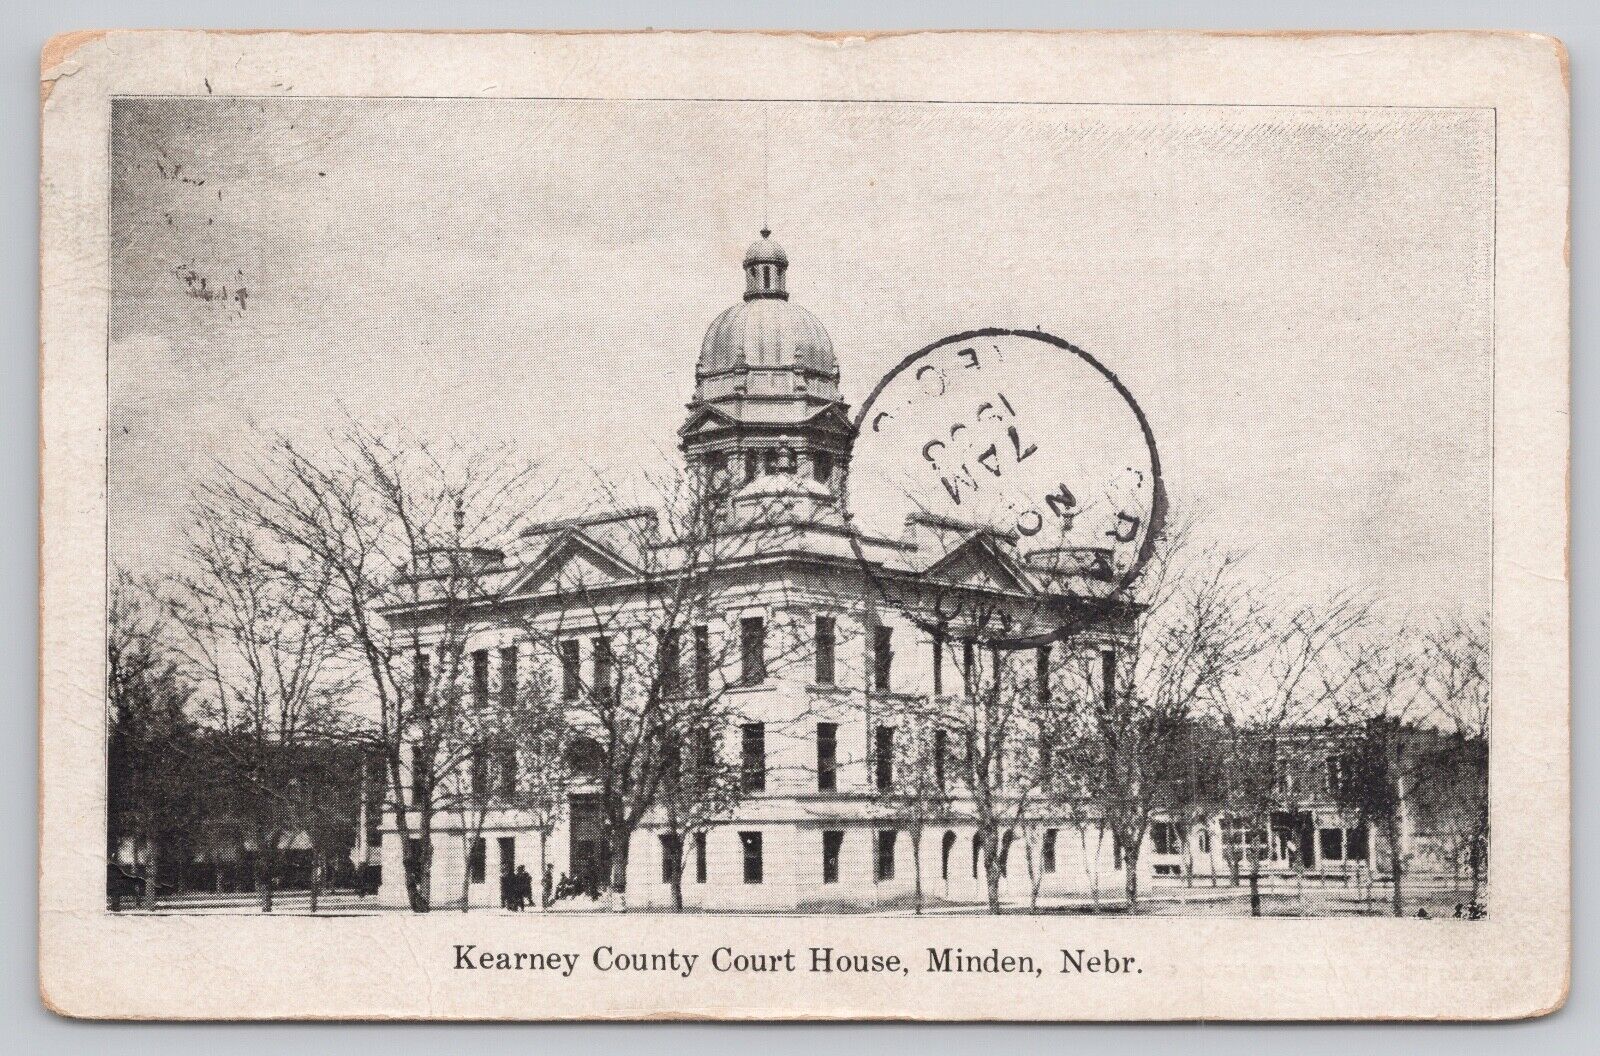 KEARNEY COUNTY COURT HOUSE, MINDEN NEBRASKA, POSTCARD c. 1908